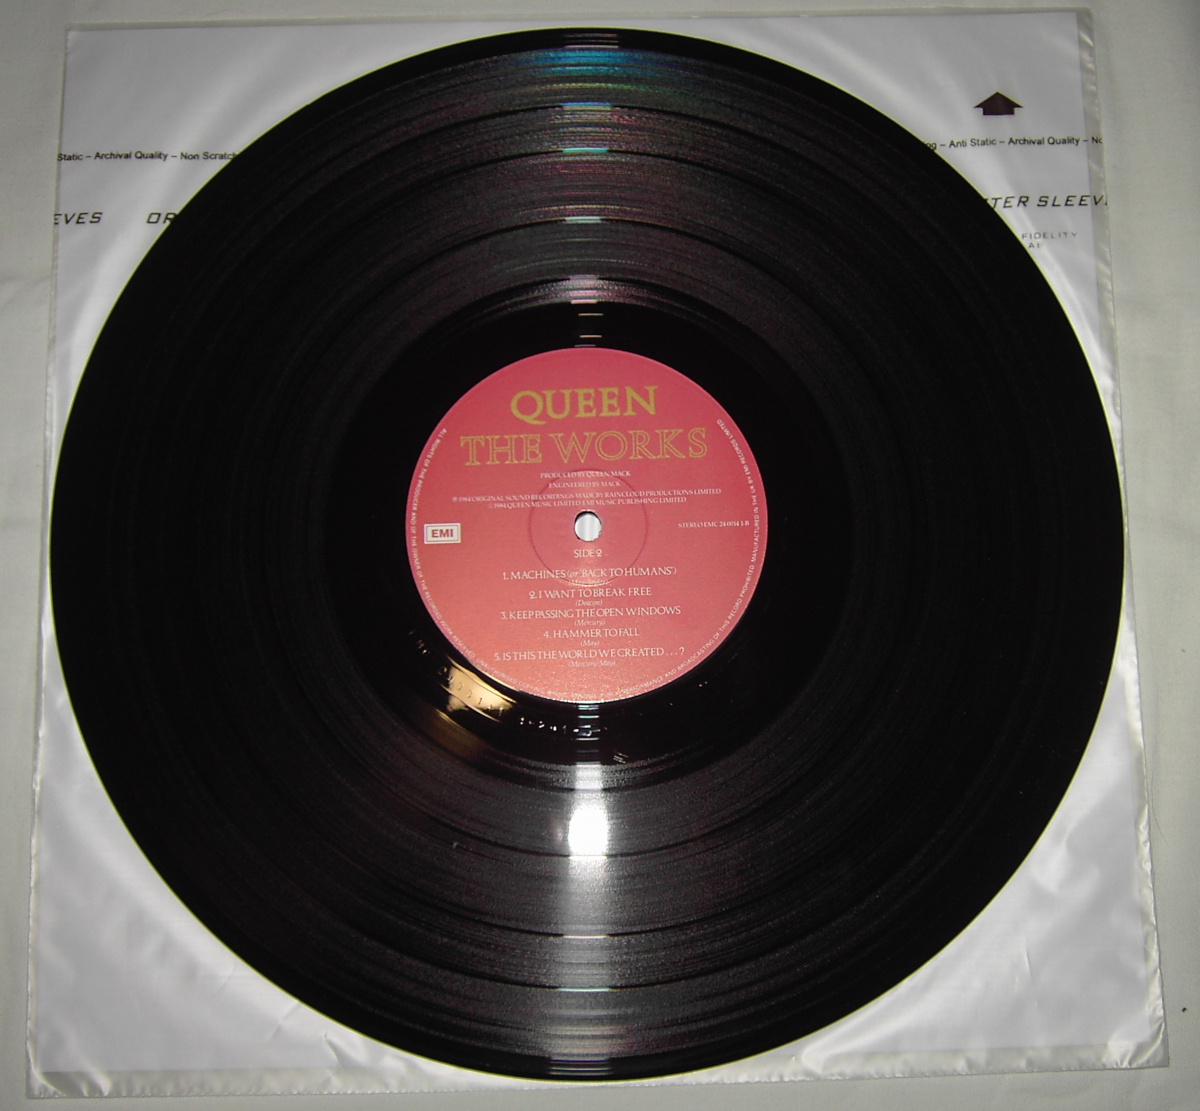 Vinyl Queen The Works [CRITIQUE RETRO] - Mes disques vinyles